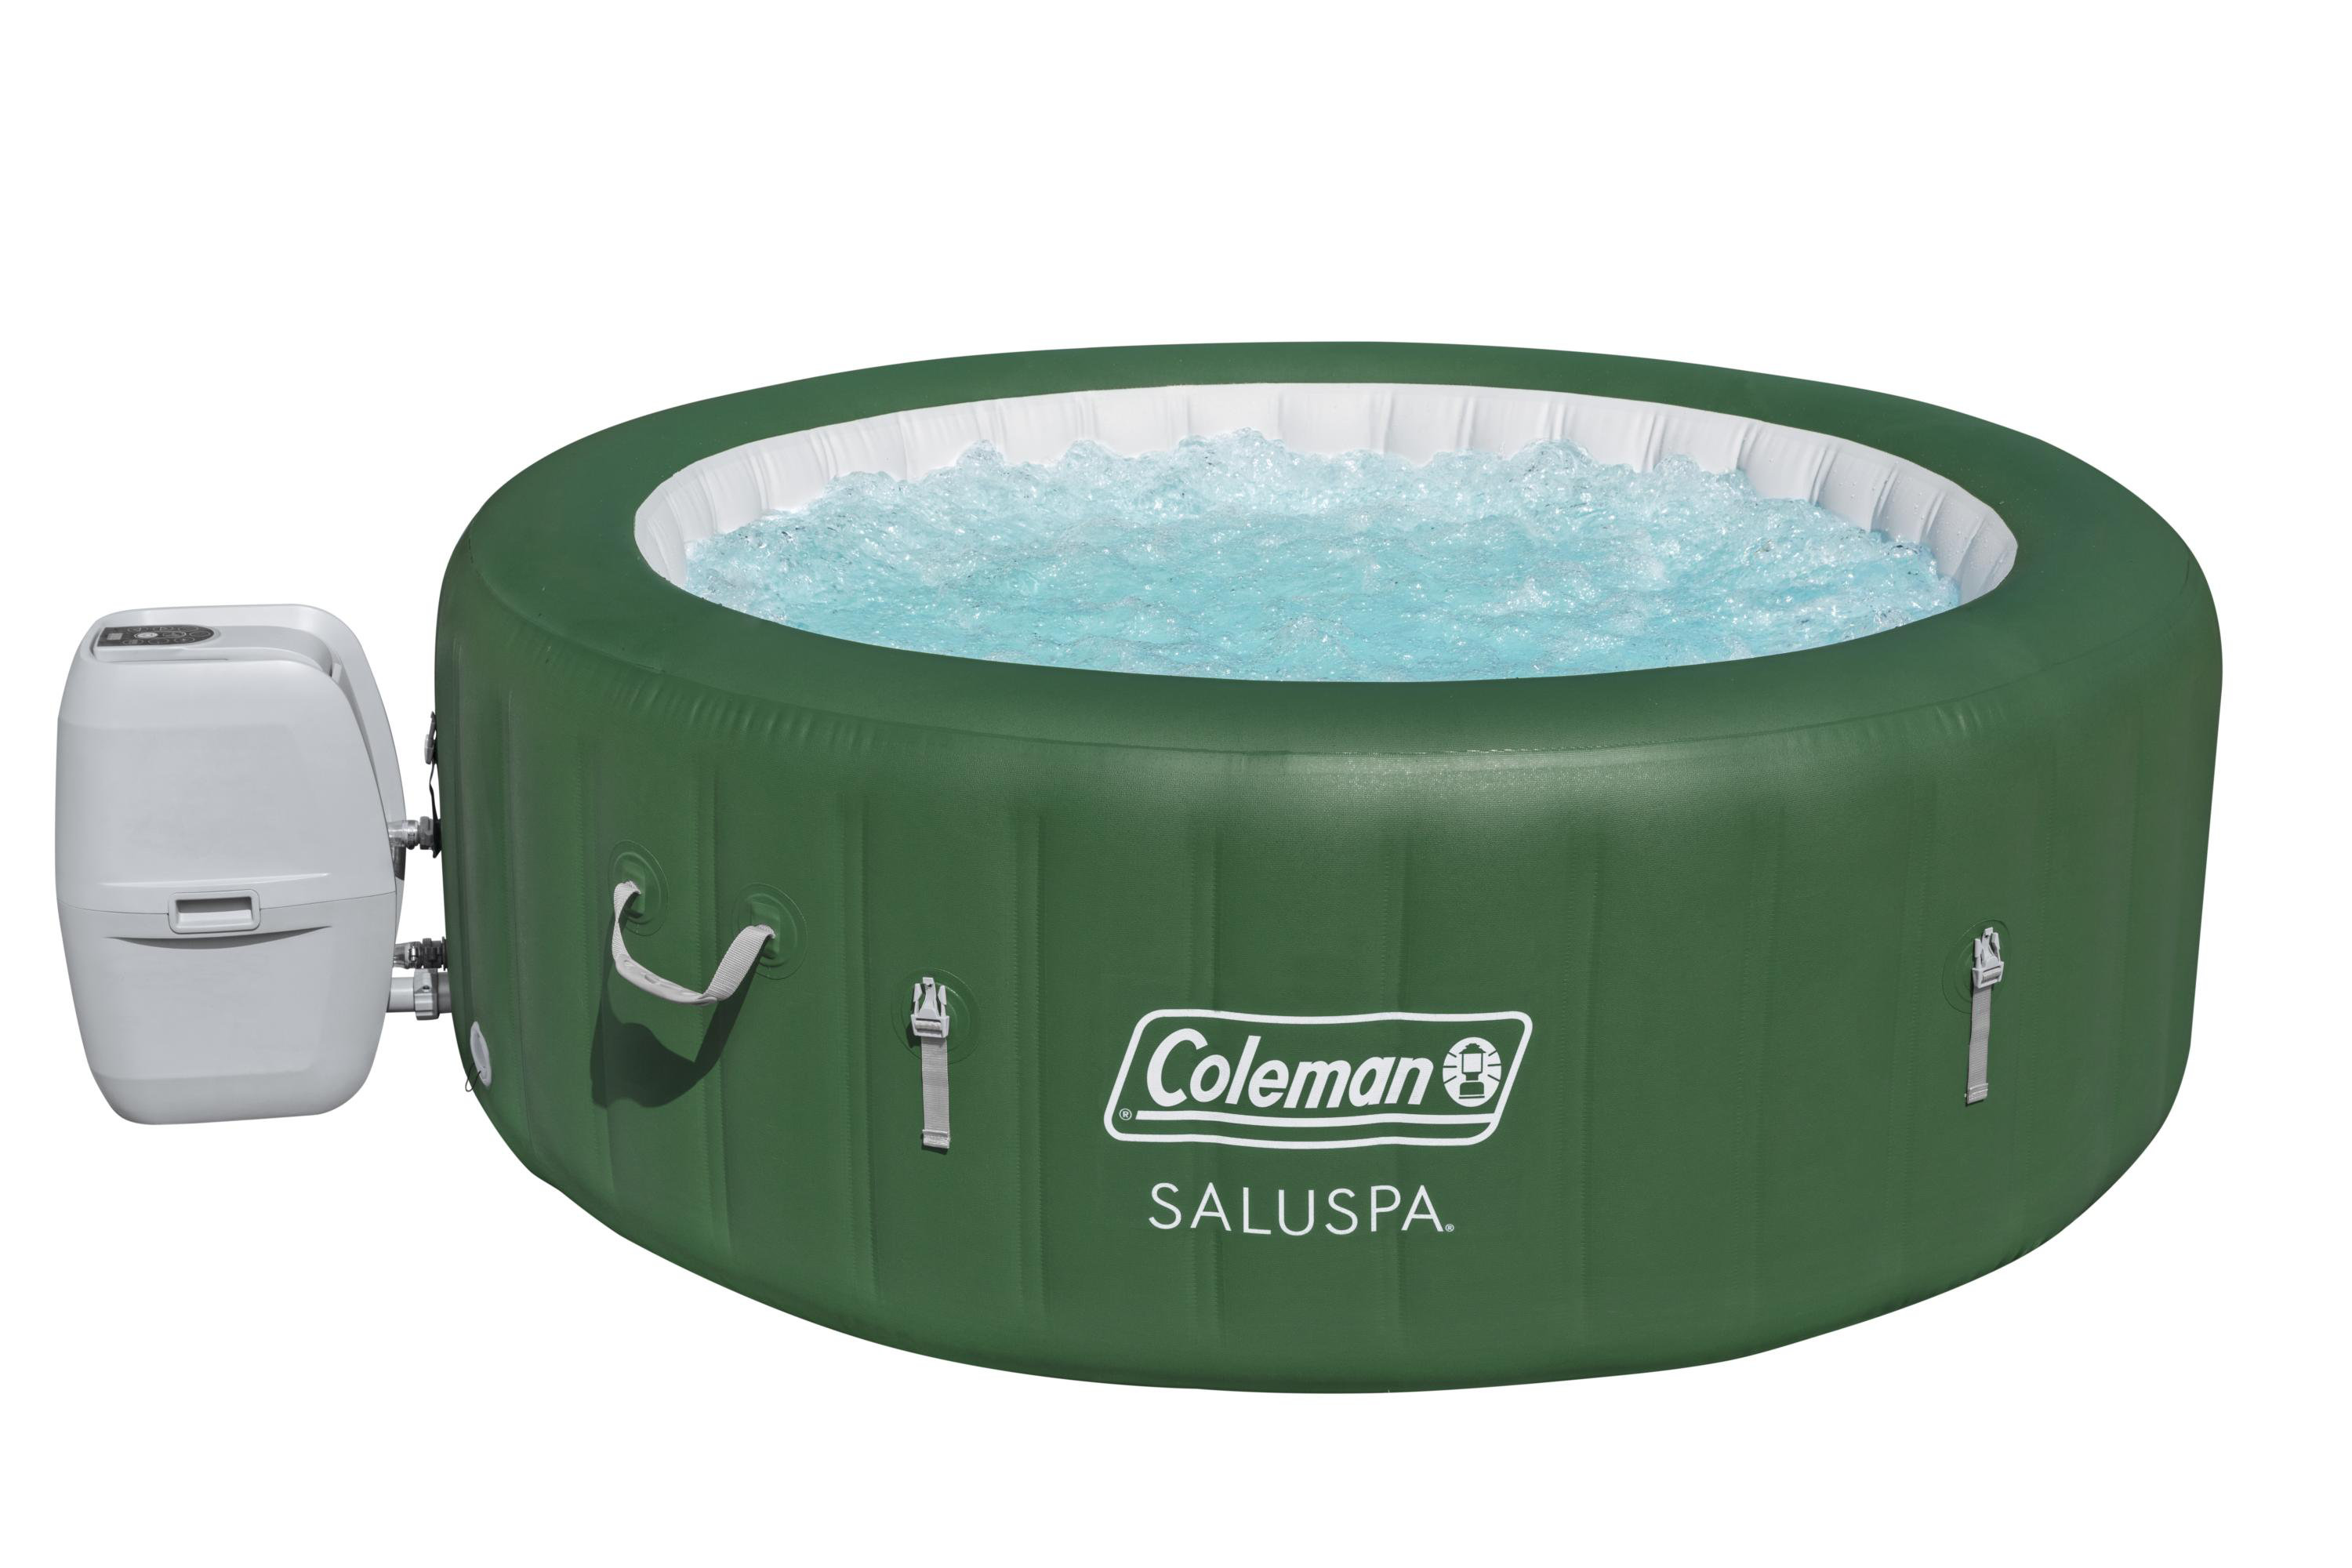 Coleman Saluspa 6 Person Portable Inflatable Outdoor Hot Tub Spa 